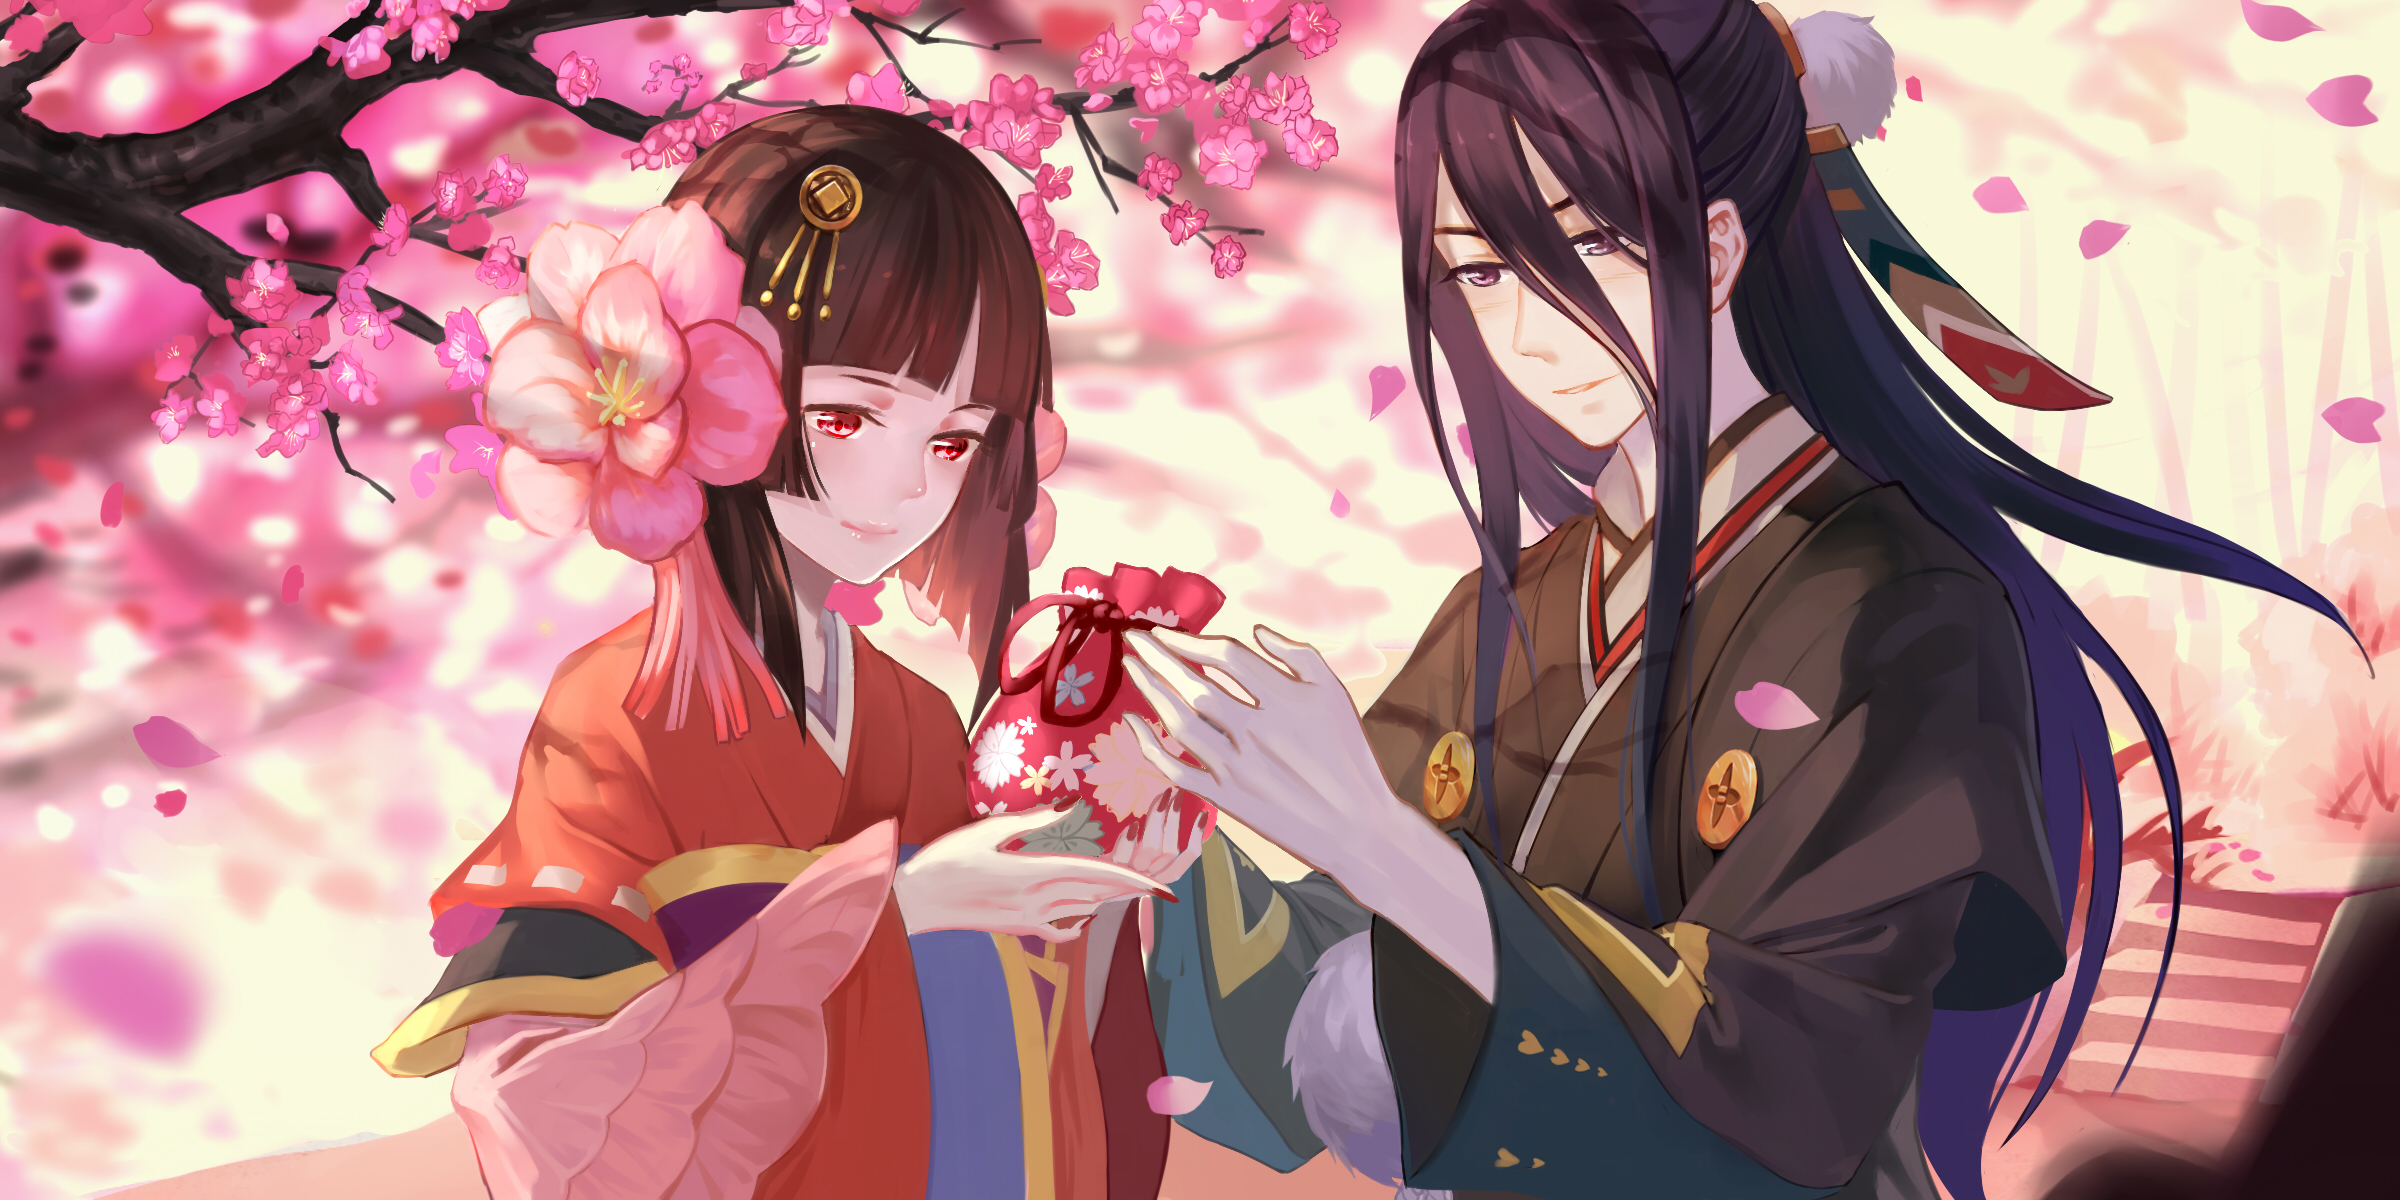 HD desktop wallpaper: Valentine's Day, Anime, Onmyoji download free picture